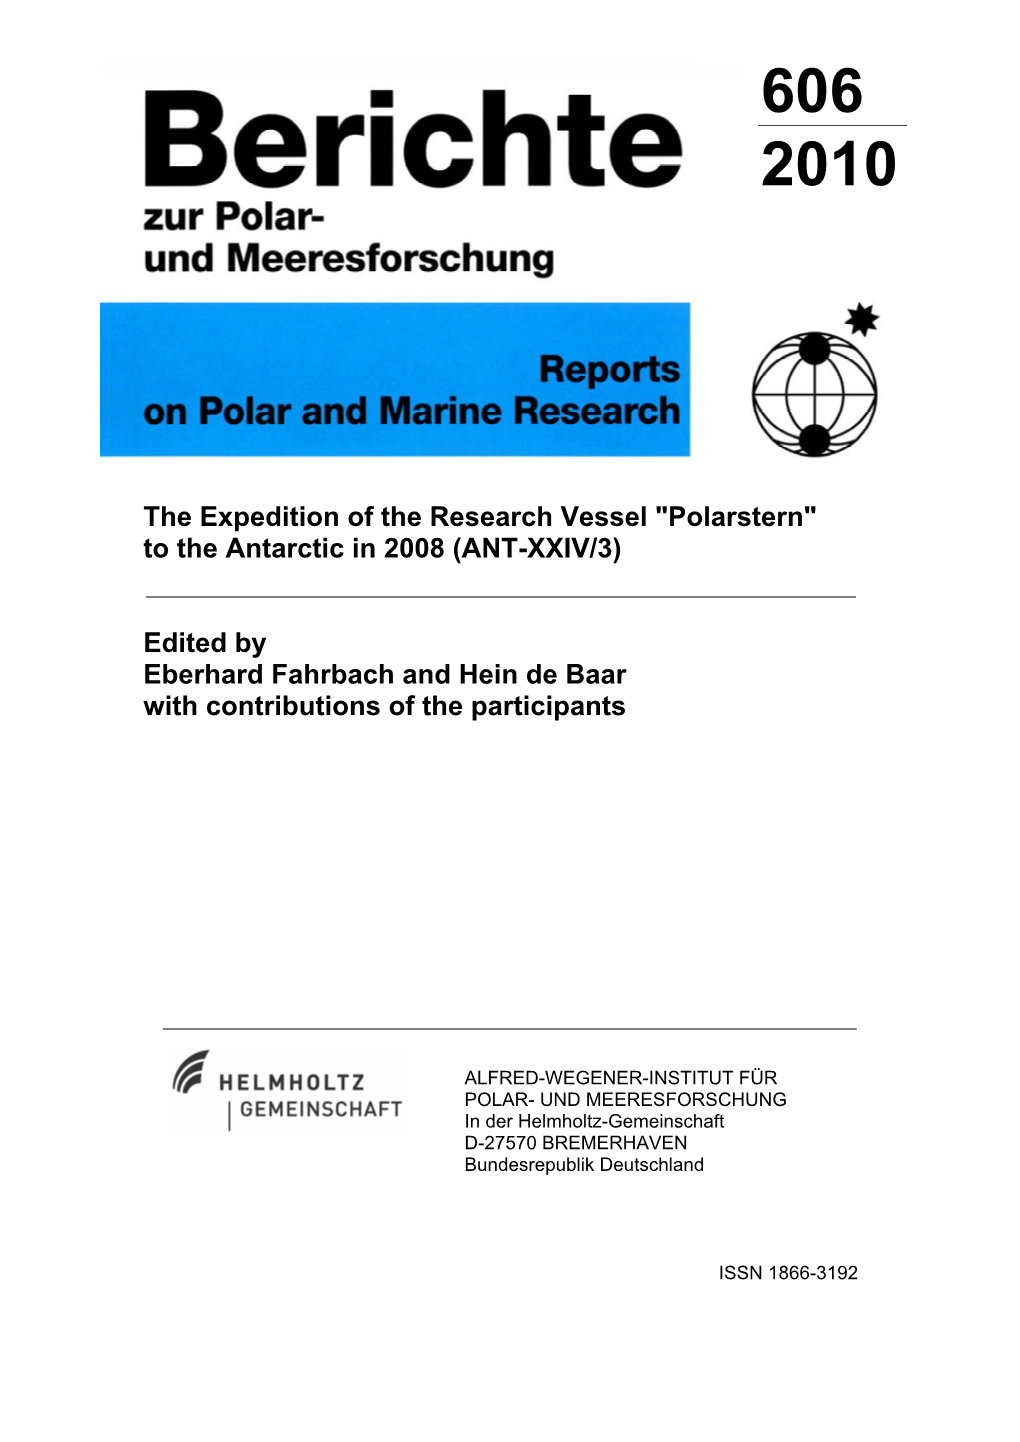 Polarstern" to the Antarctic in 2008 (ANT-XXIV/3)